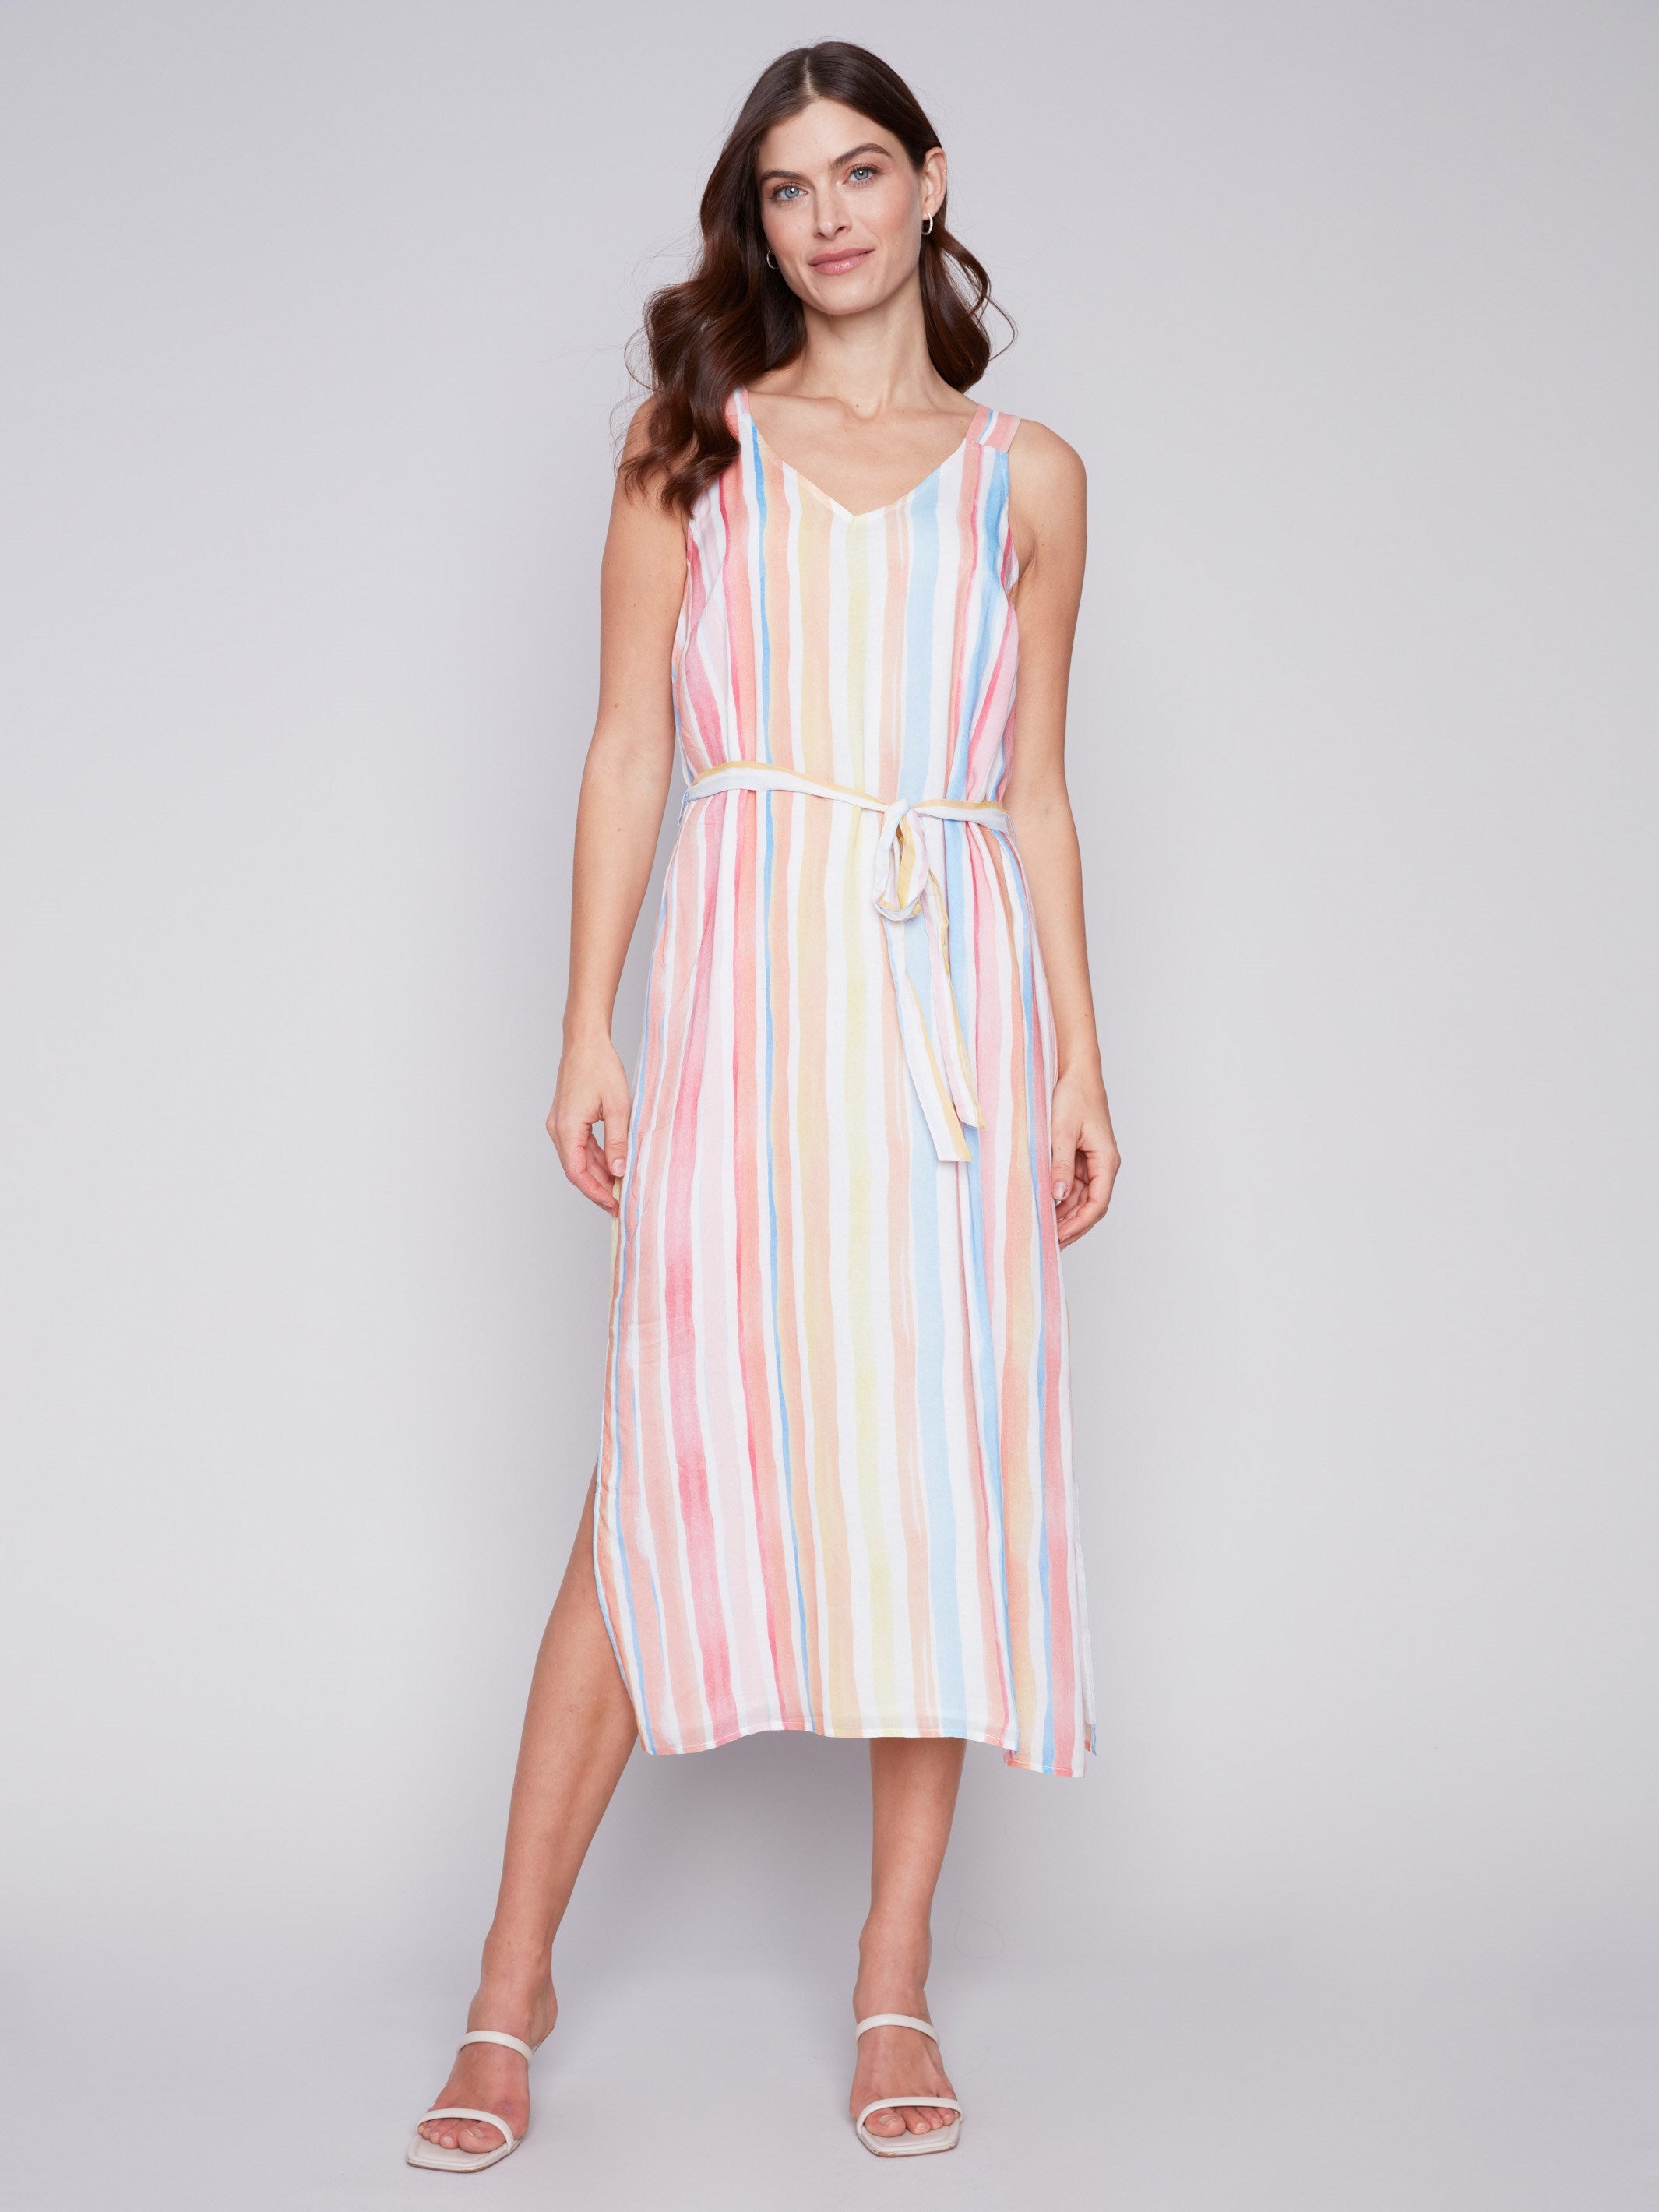 Printed Chiffon Dress - Stripes - Charlie B Collection Canada - Image 1